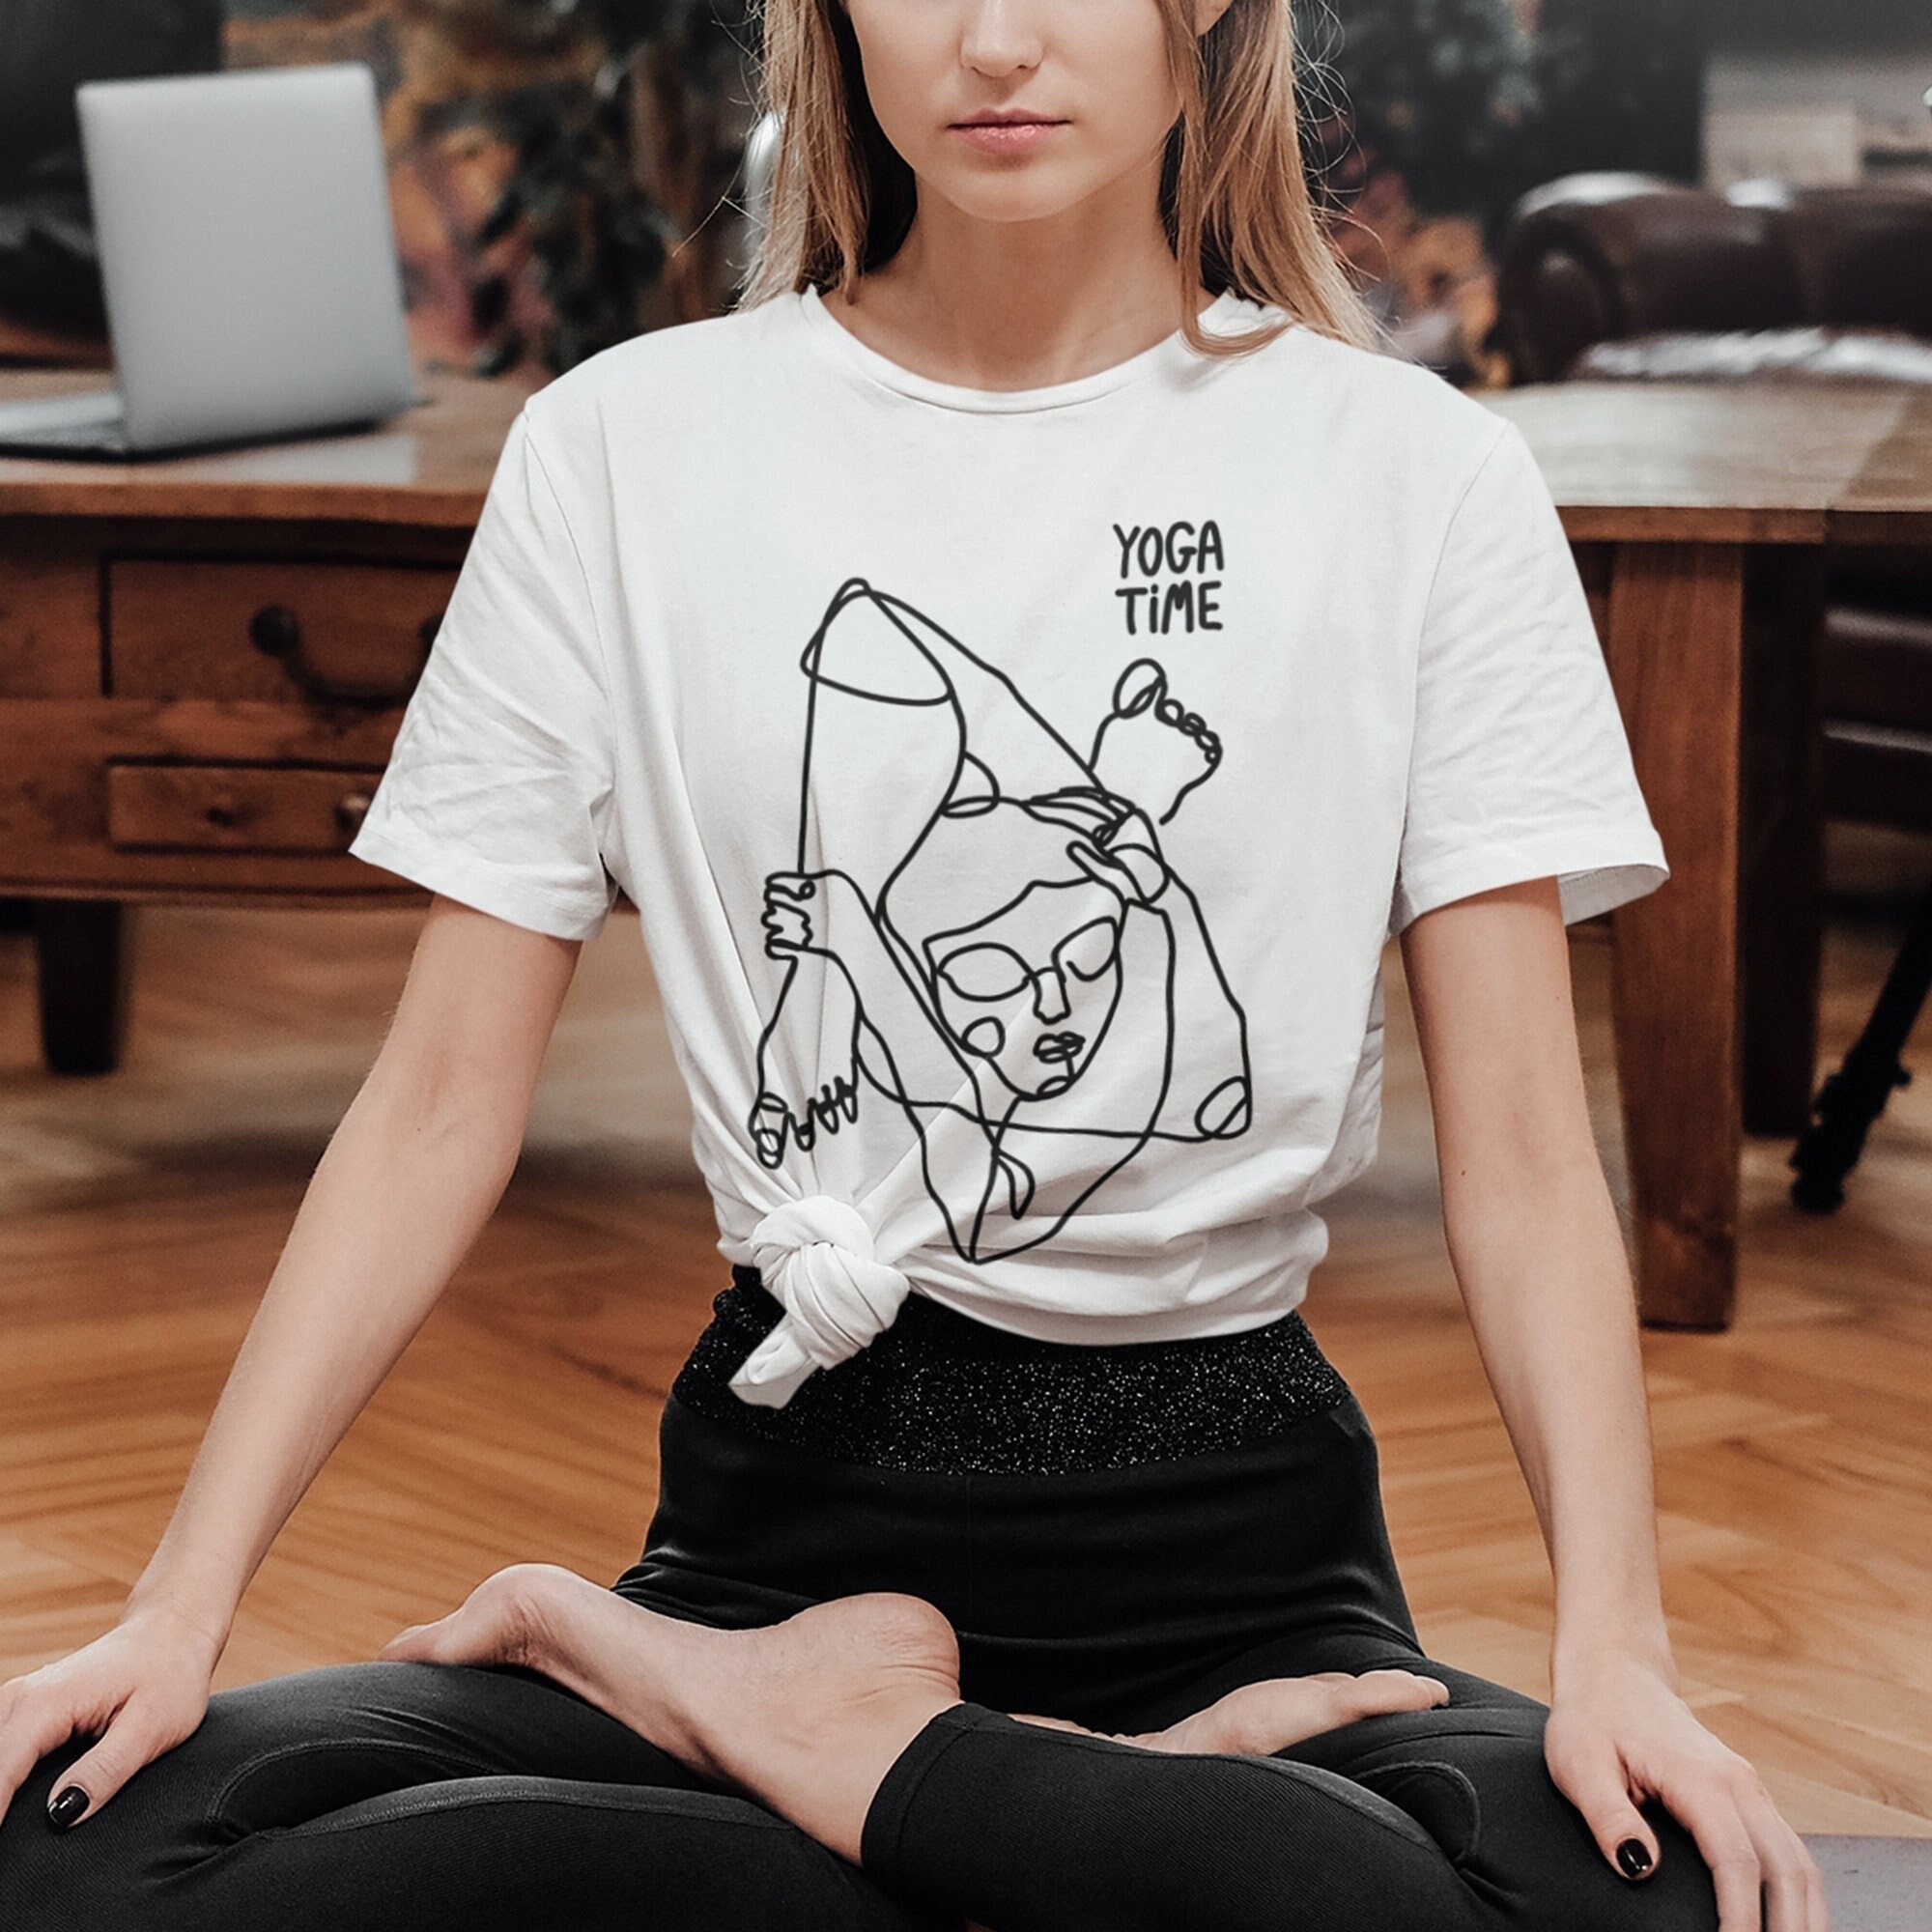 Line Shirt Yoga T-shirt Top Tee Minimalist Line Art - Etsy